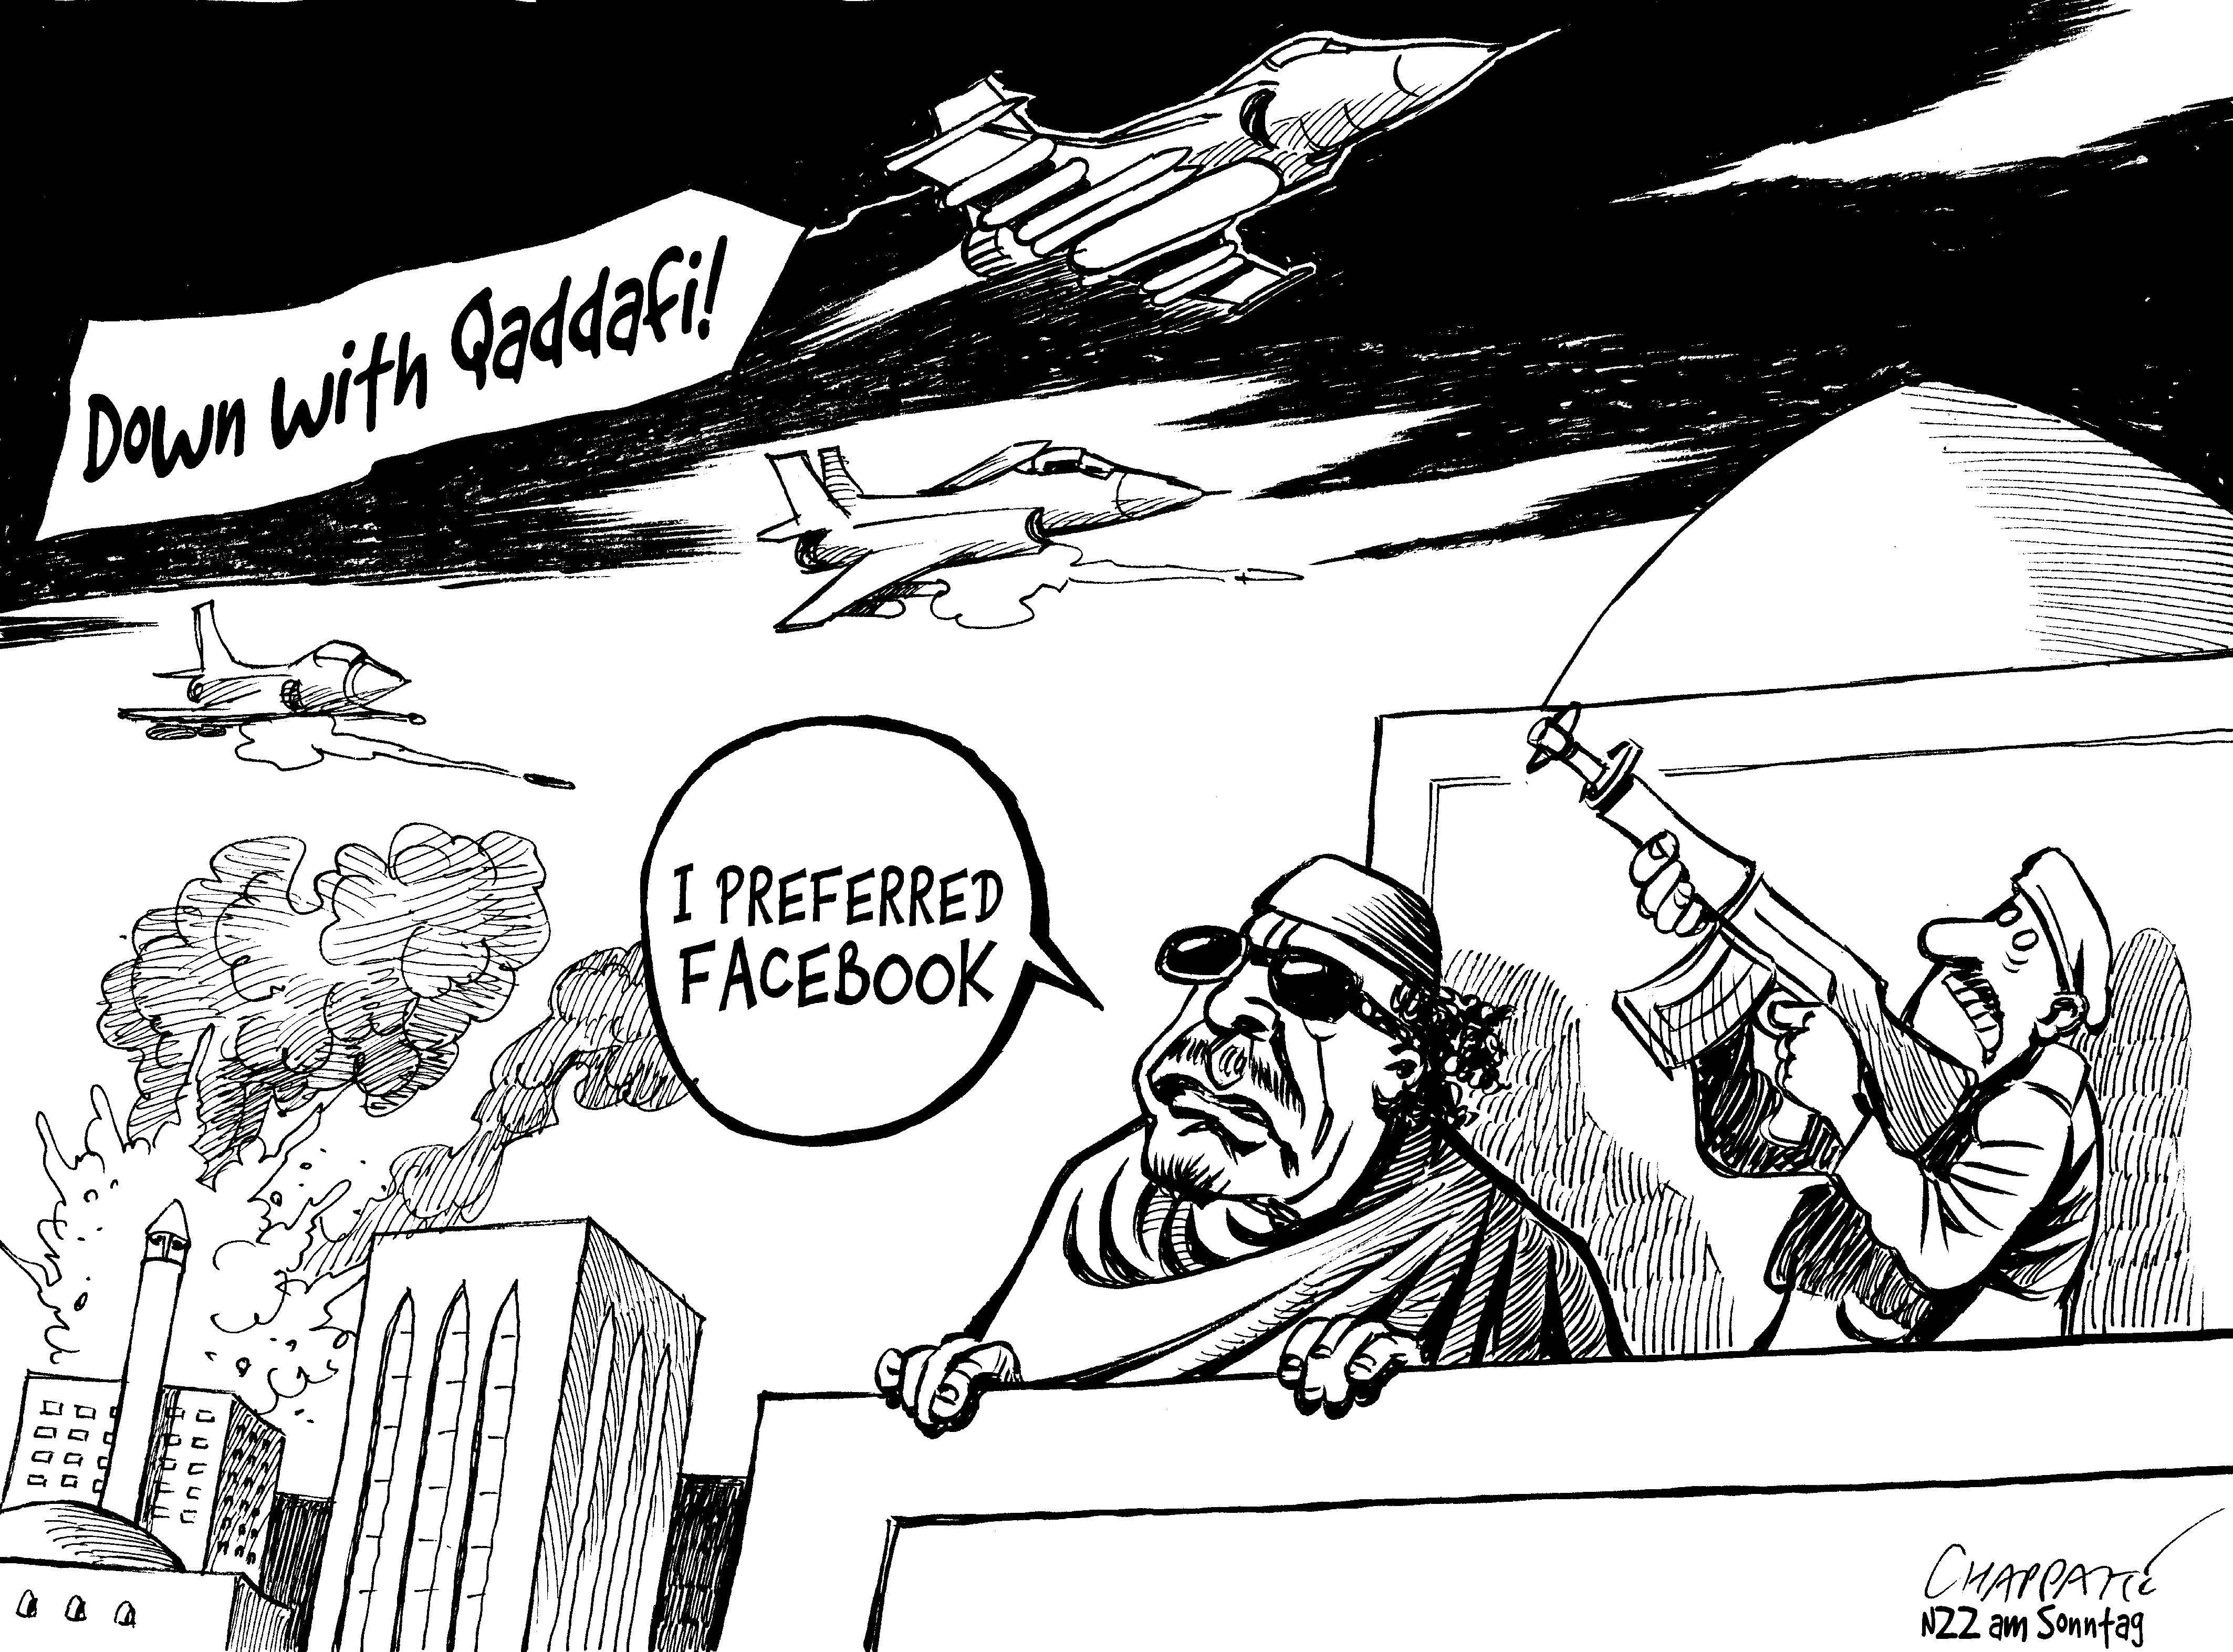 Military Campaign Against Qaddafi